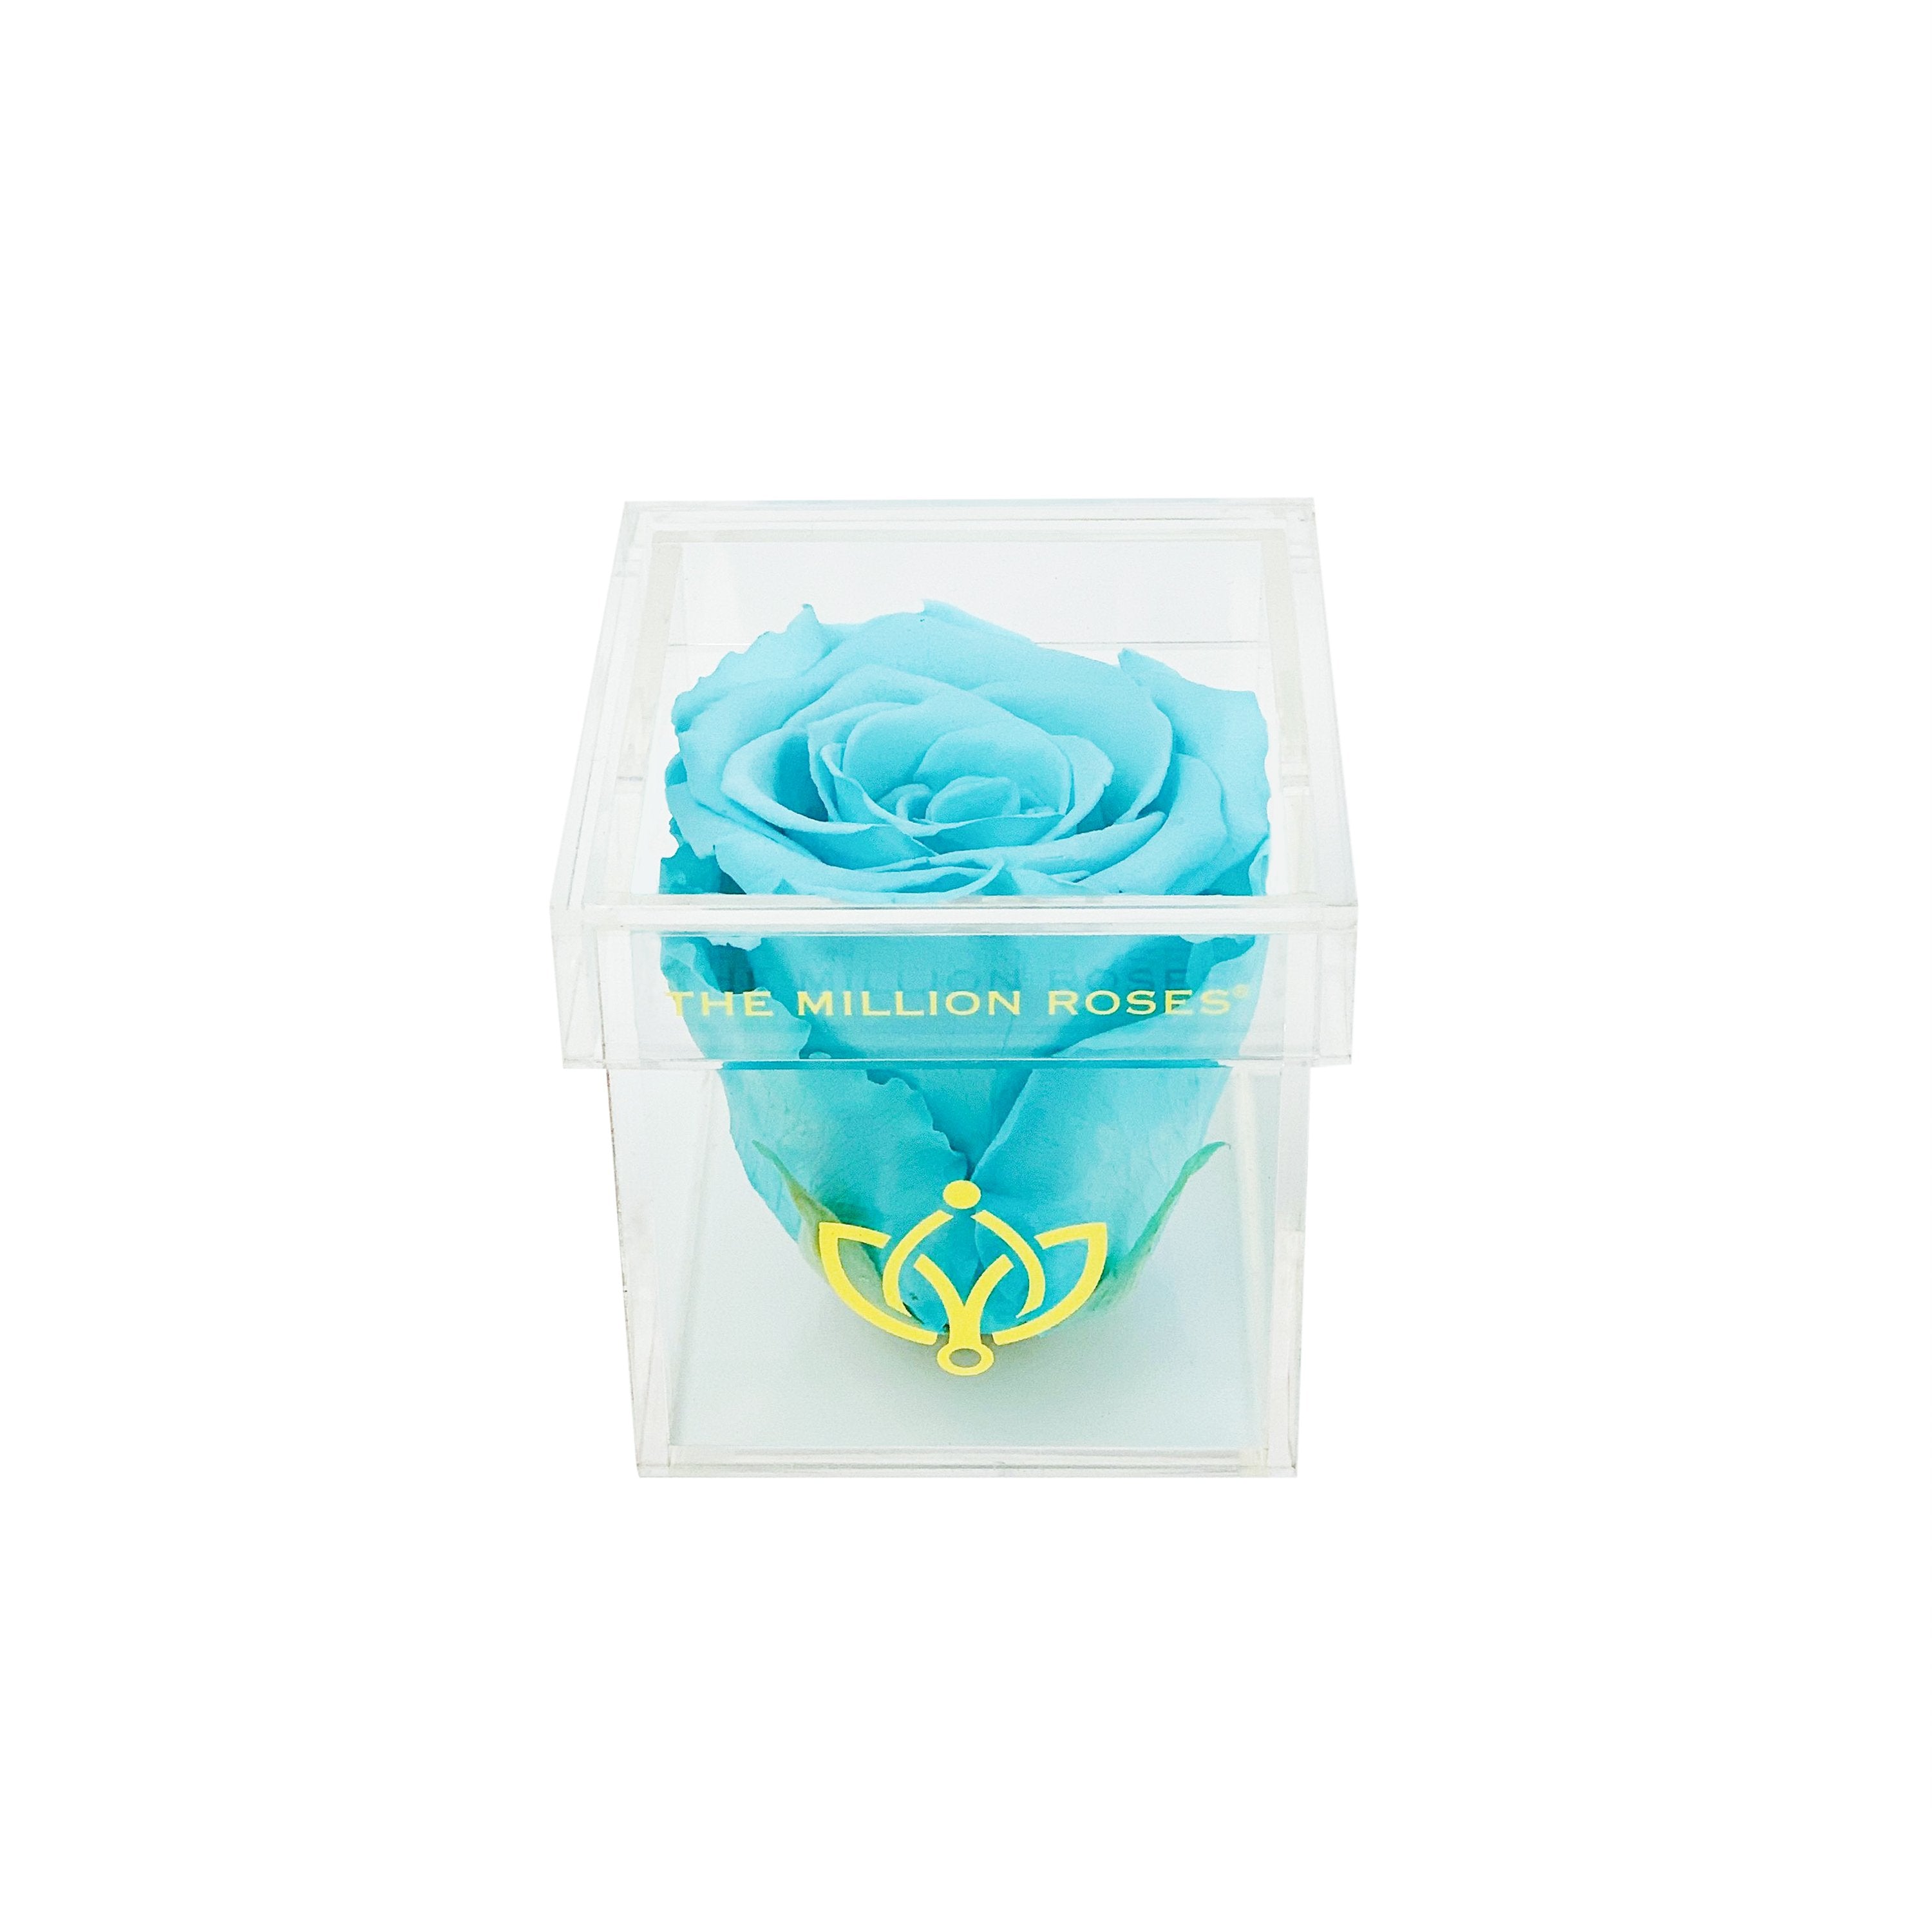 The Acrylic - Single Rose Box - Tiffany Blue Rose